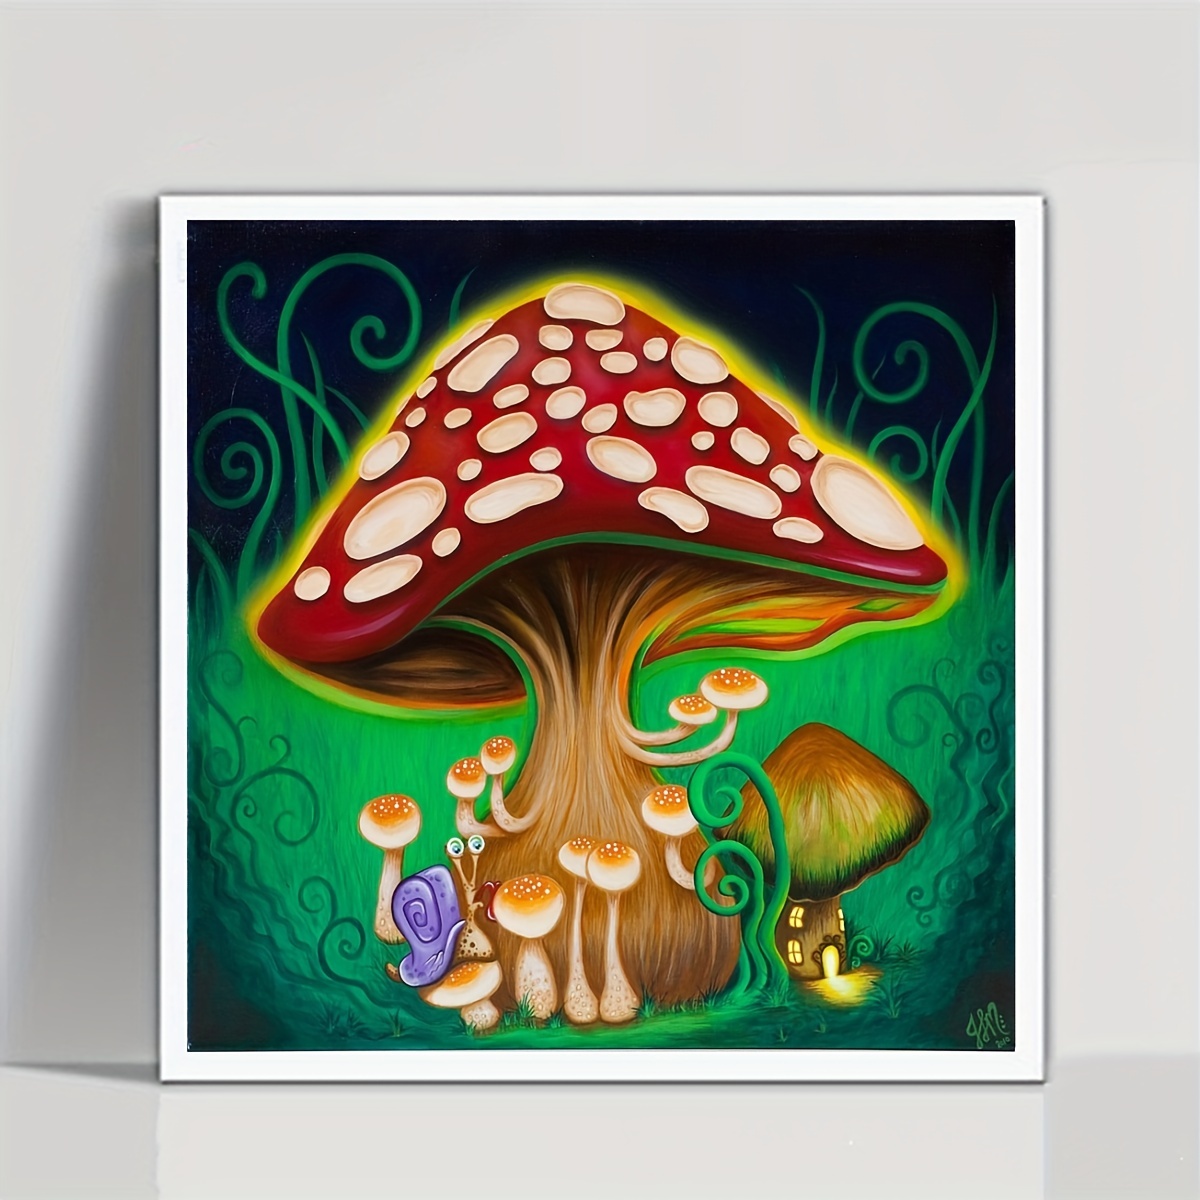 Daicur Diamond Painting Kits, 6 Pack Mushroom Diamond Art Kits for